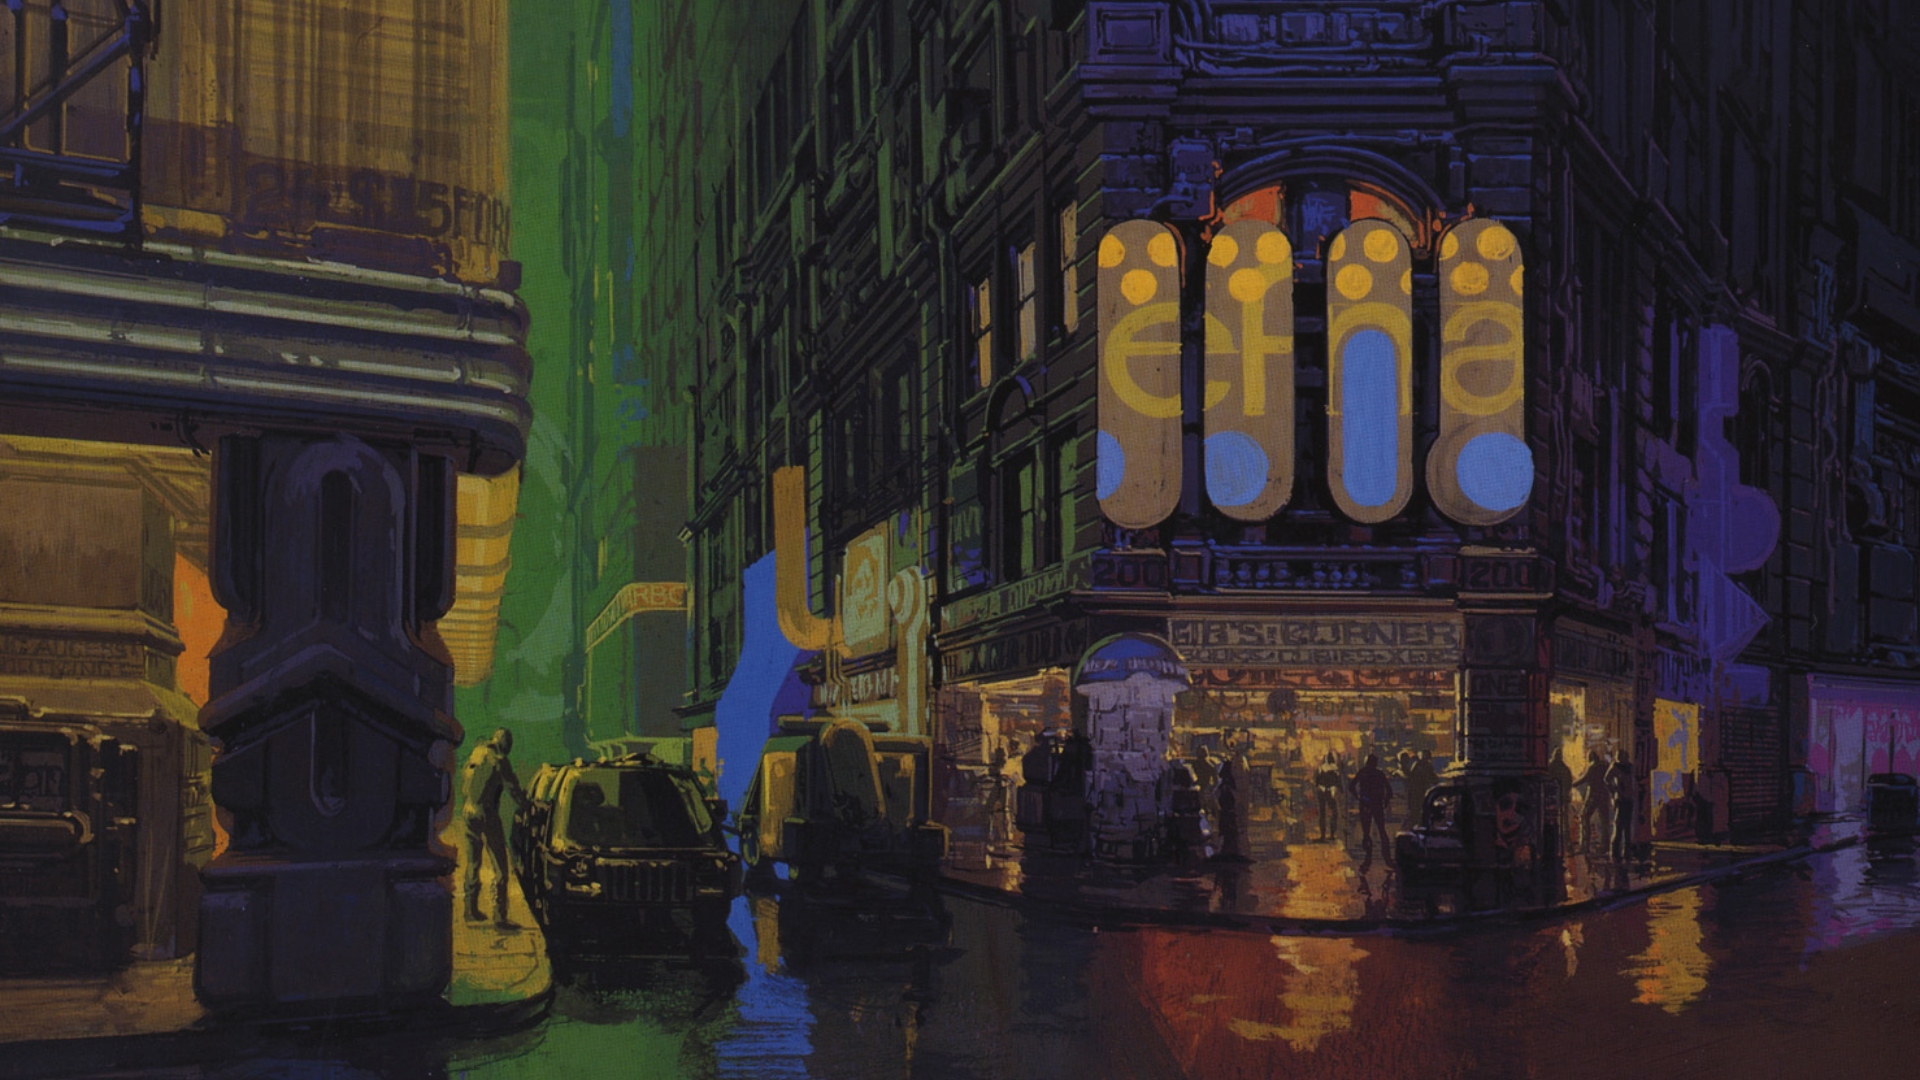 Blade Runner Computer Wallpapers Desktop Backgrounds 1920x1080 ID 1920x1080